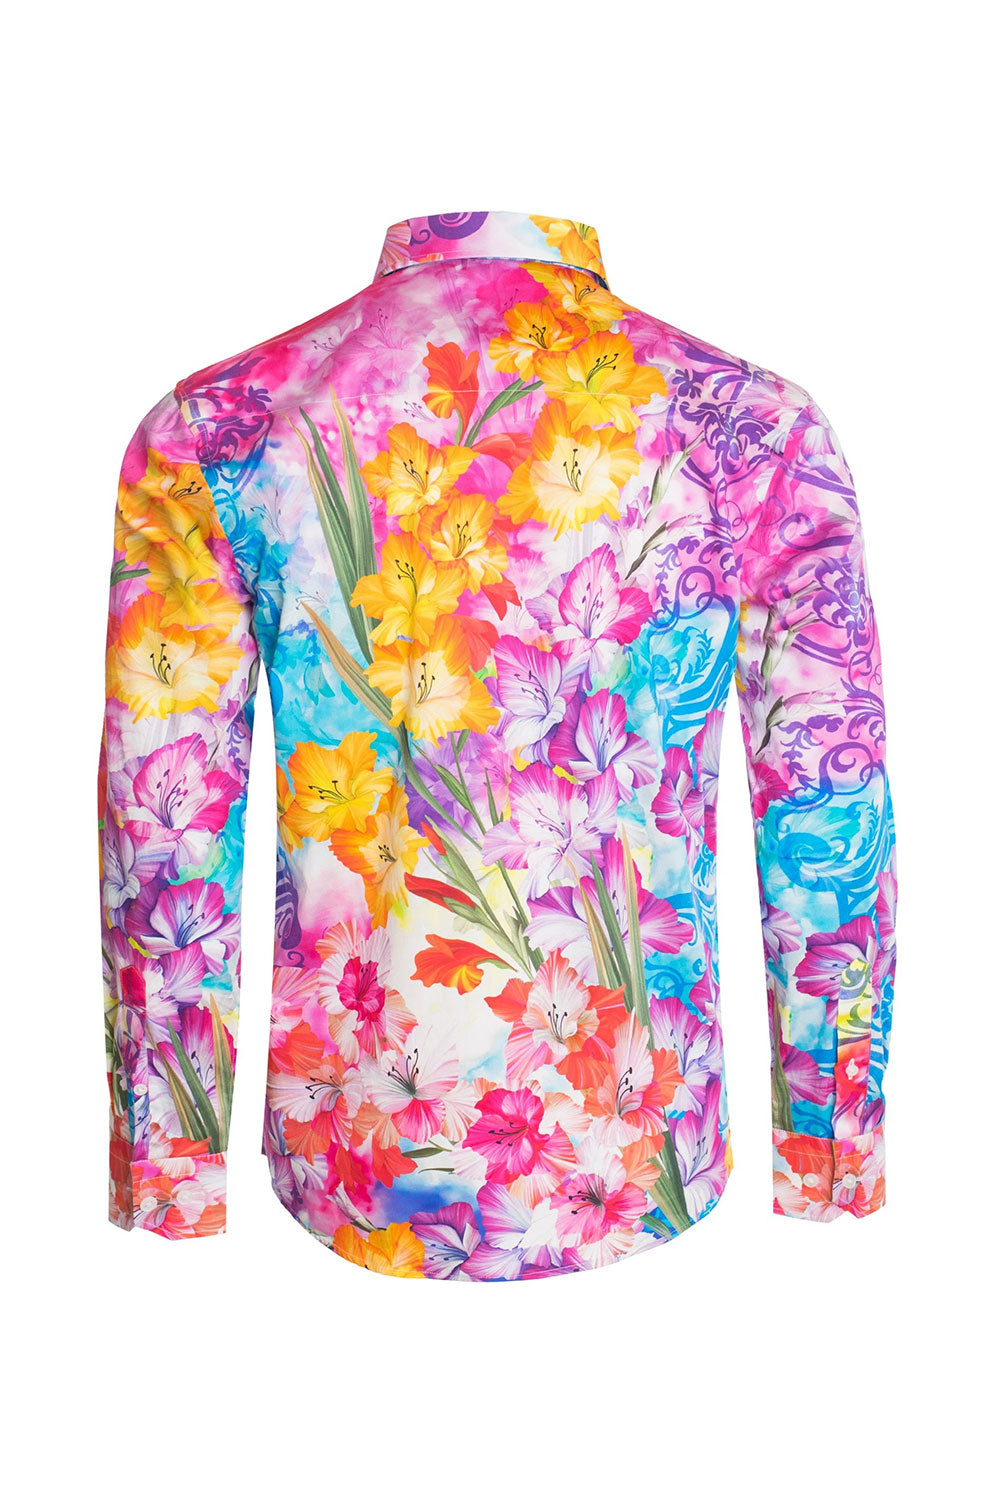 BARABAS Men's Watercolor Floral Printed Designer Dress Shirts SP210